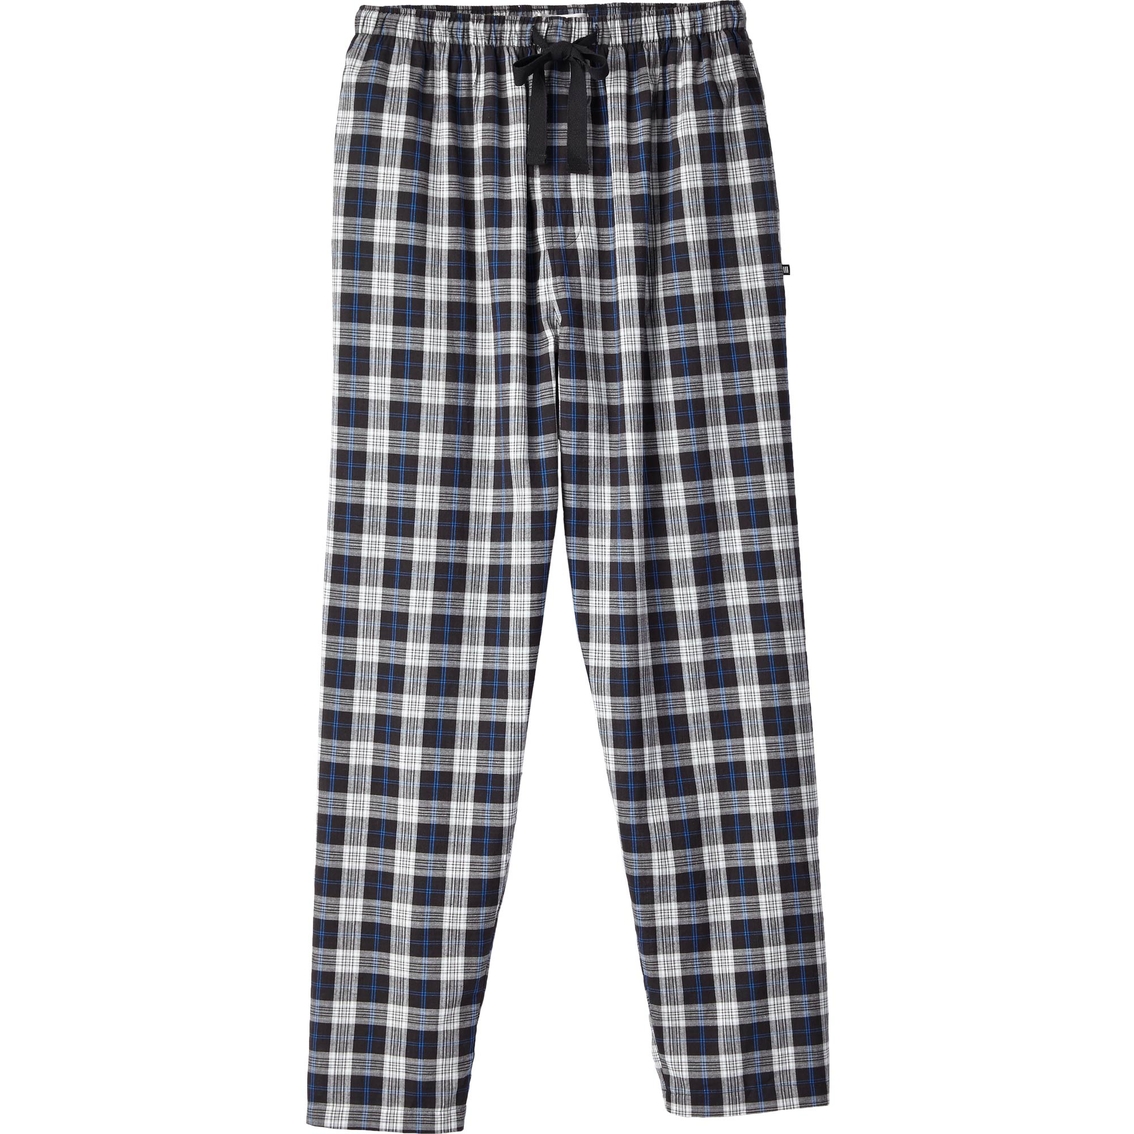 Geoffrey Beene Broadcloth Sleep Pants | Pajamas & Robes | Clothing ...